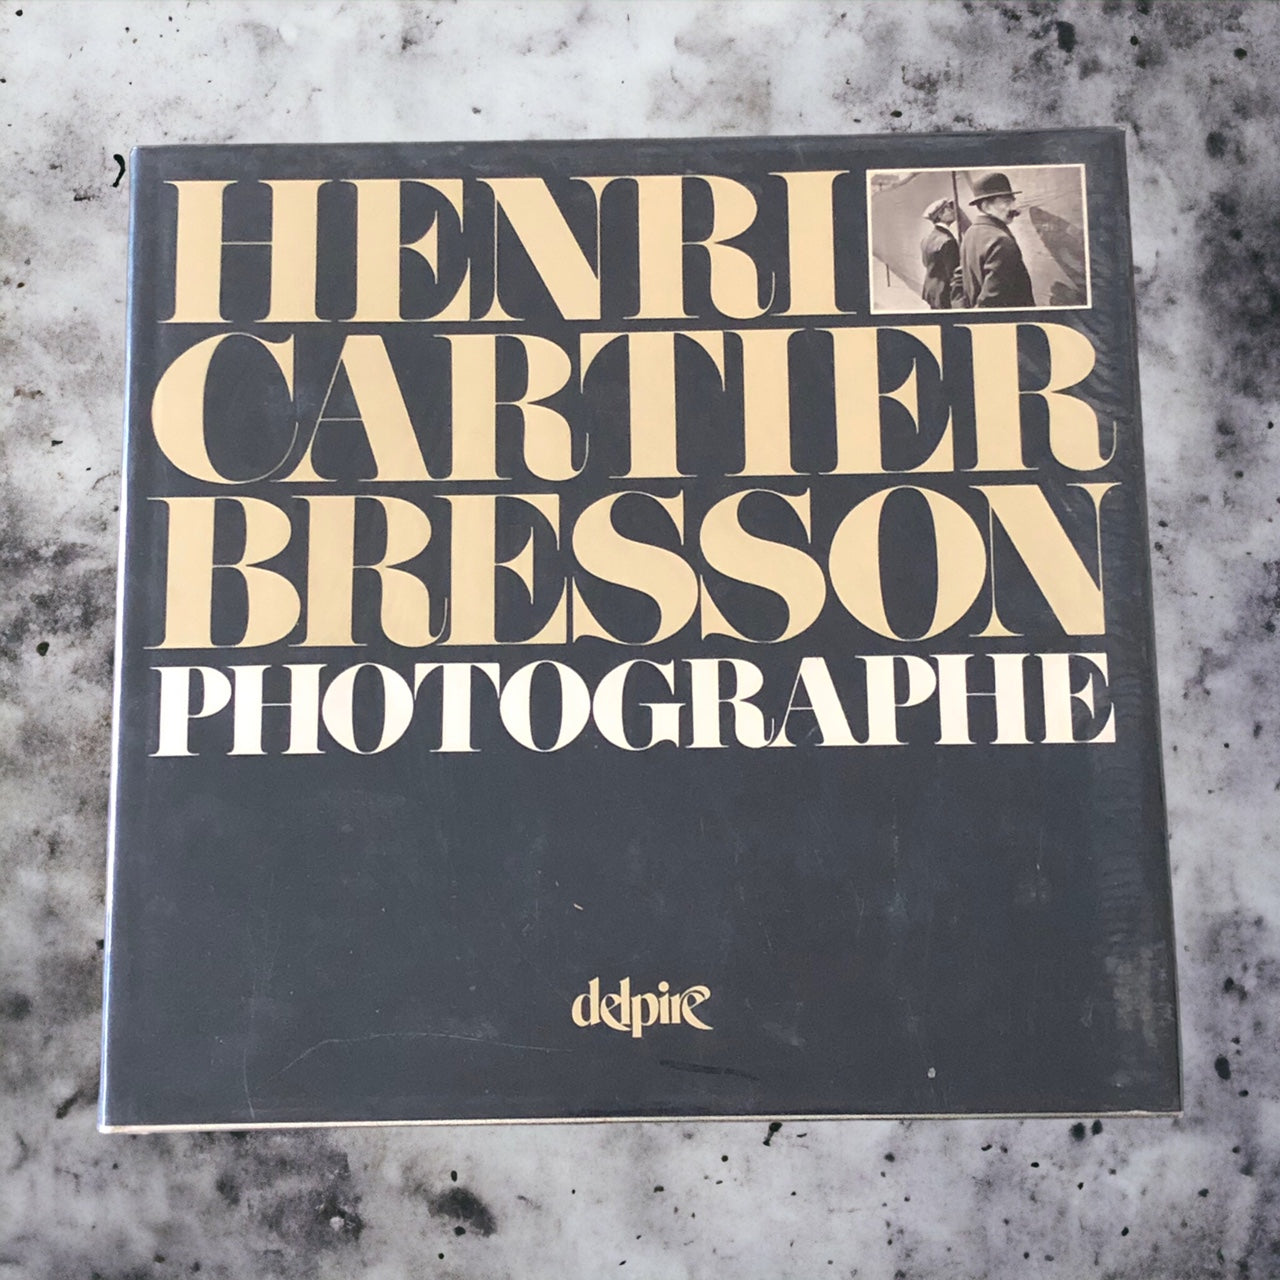 Henri Cartier Bresson - Photographe